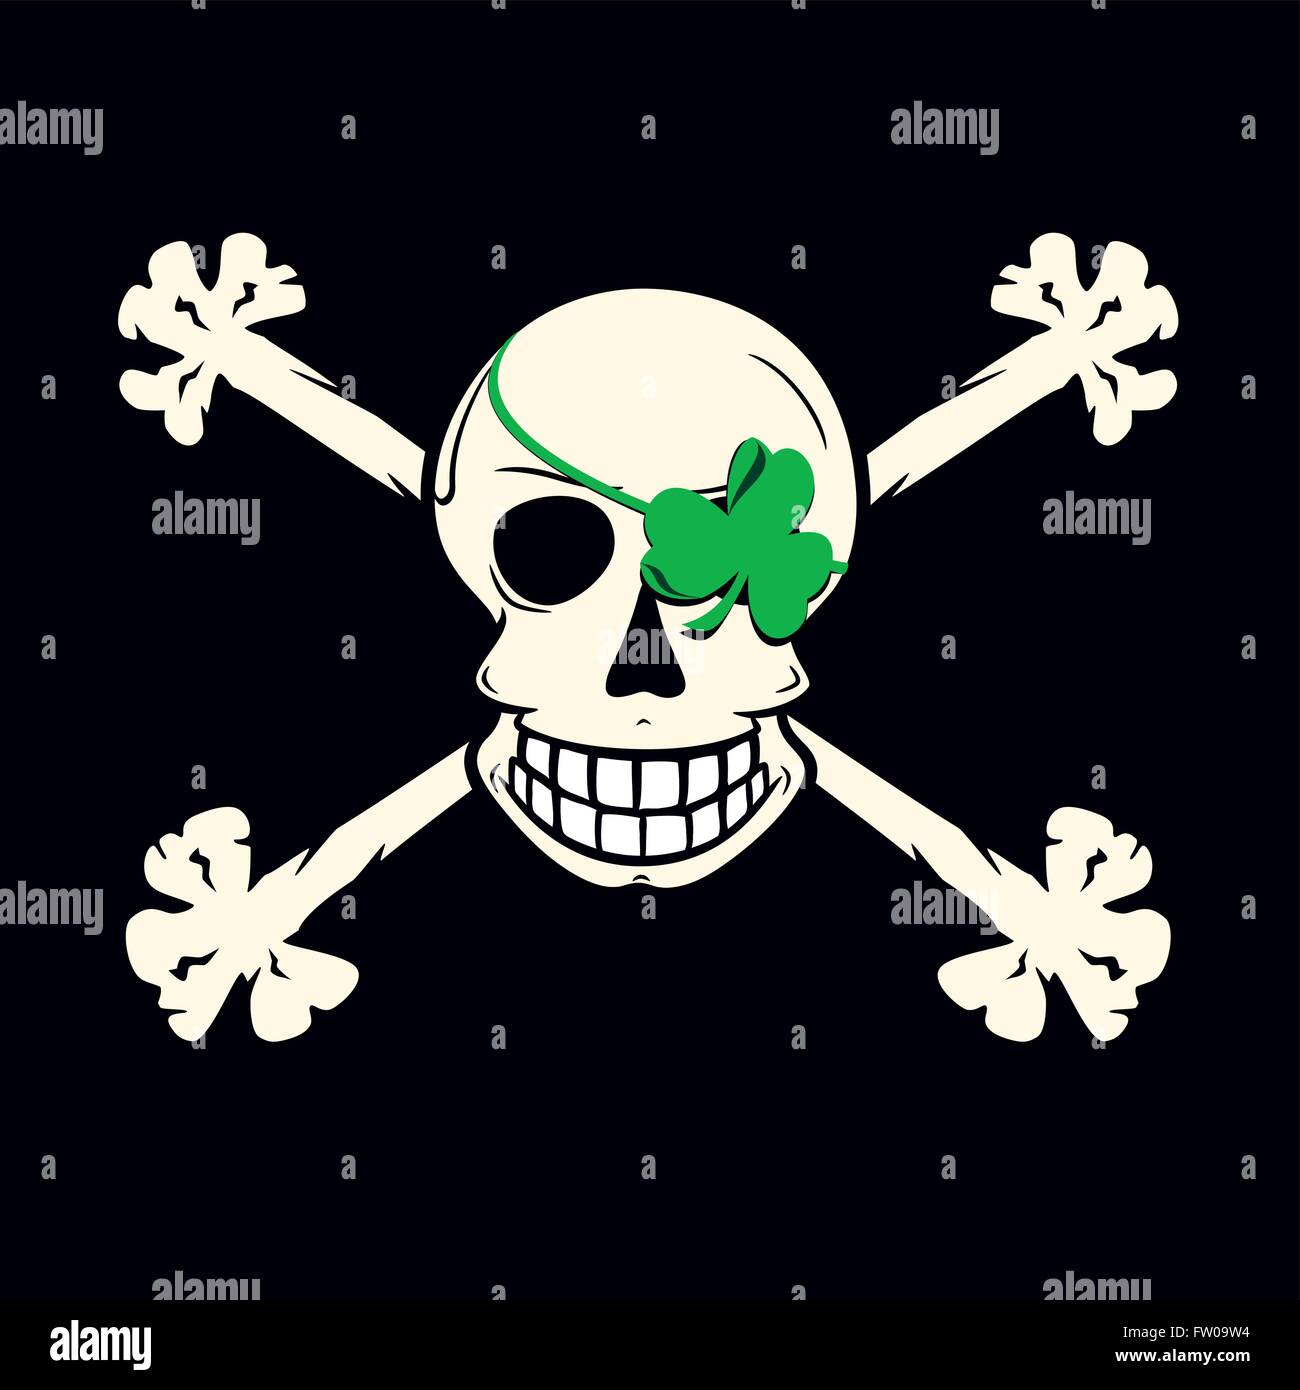 Jolly Roger a la Irish with green shamrock eyepatch, skull, bones and black background. Stock Vector